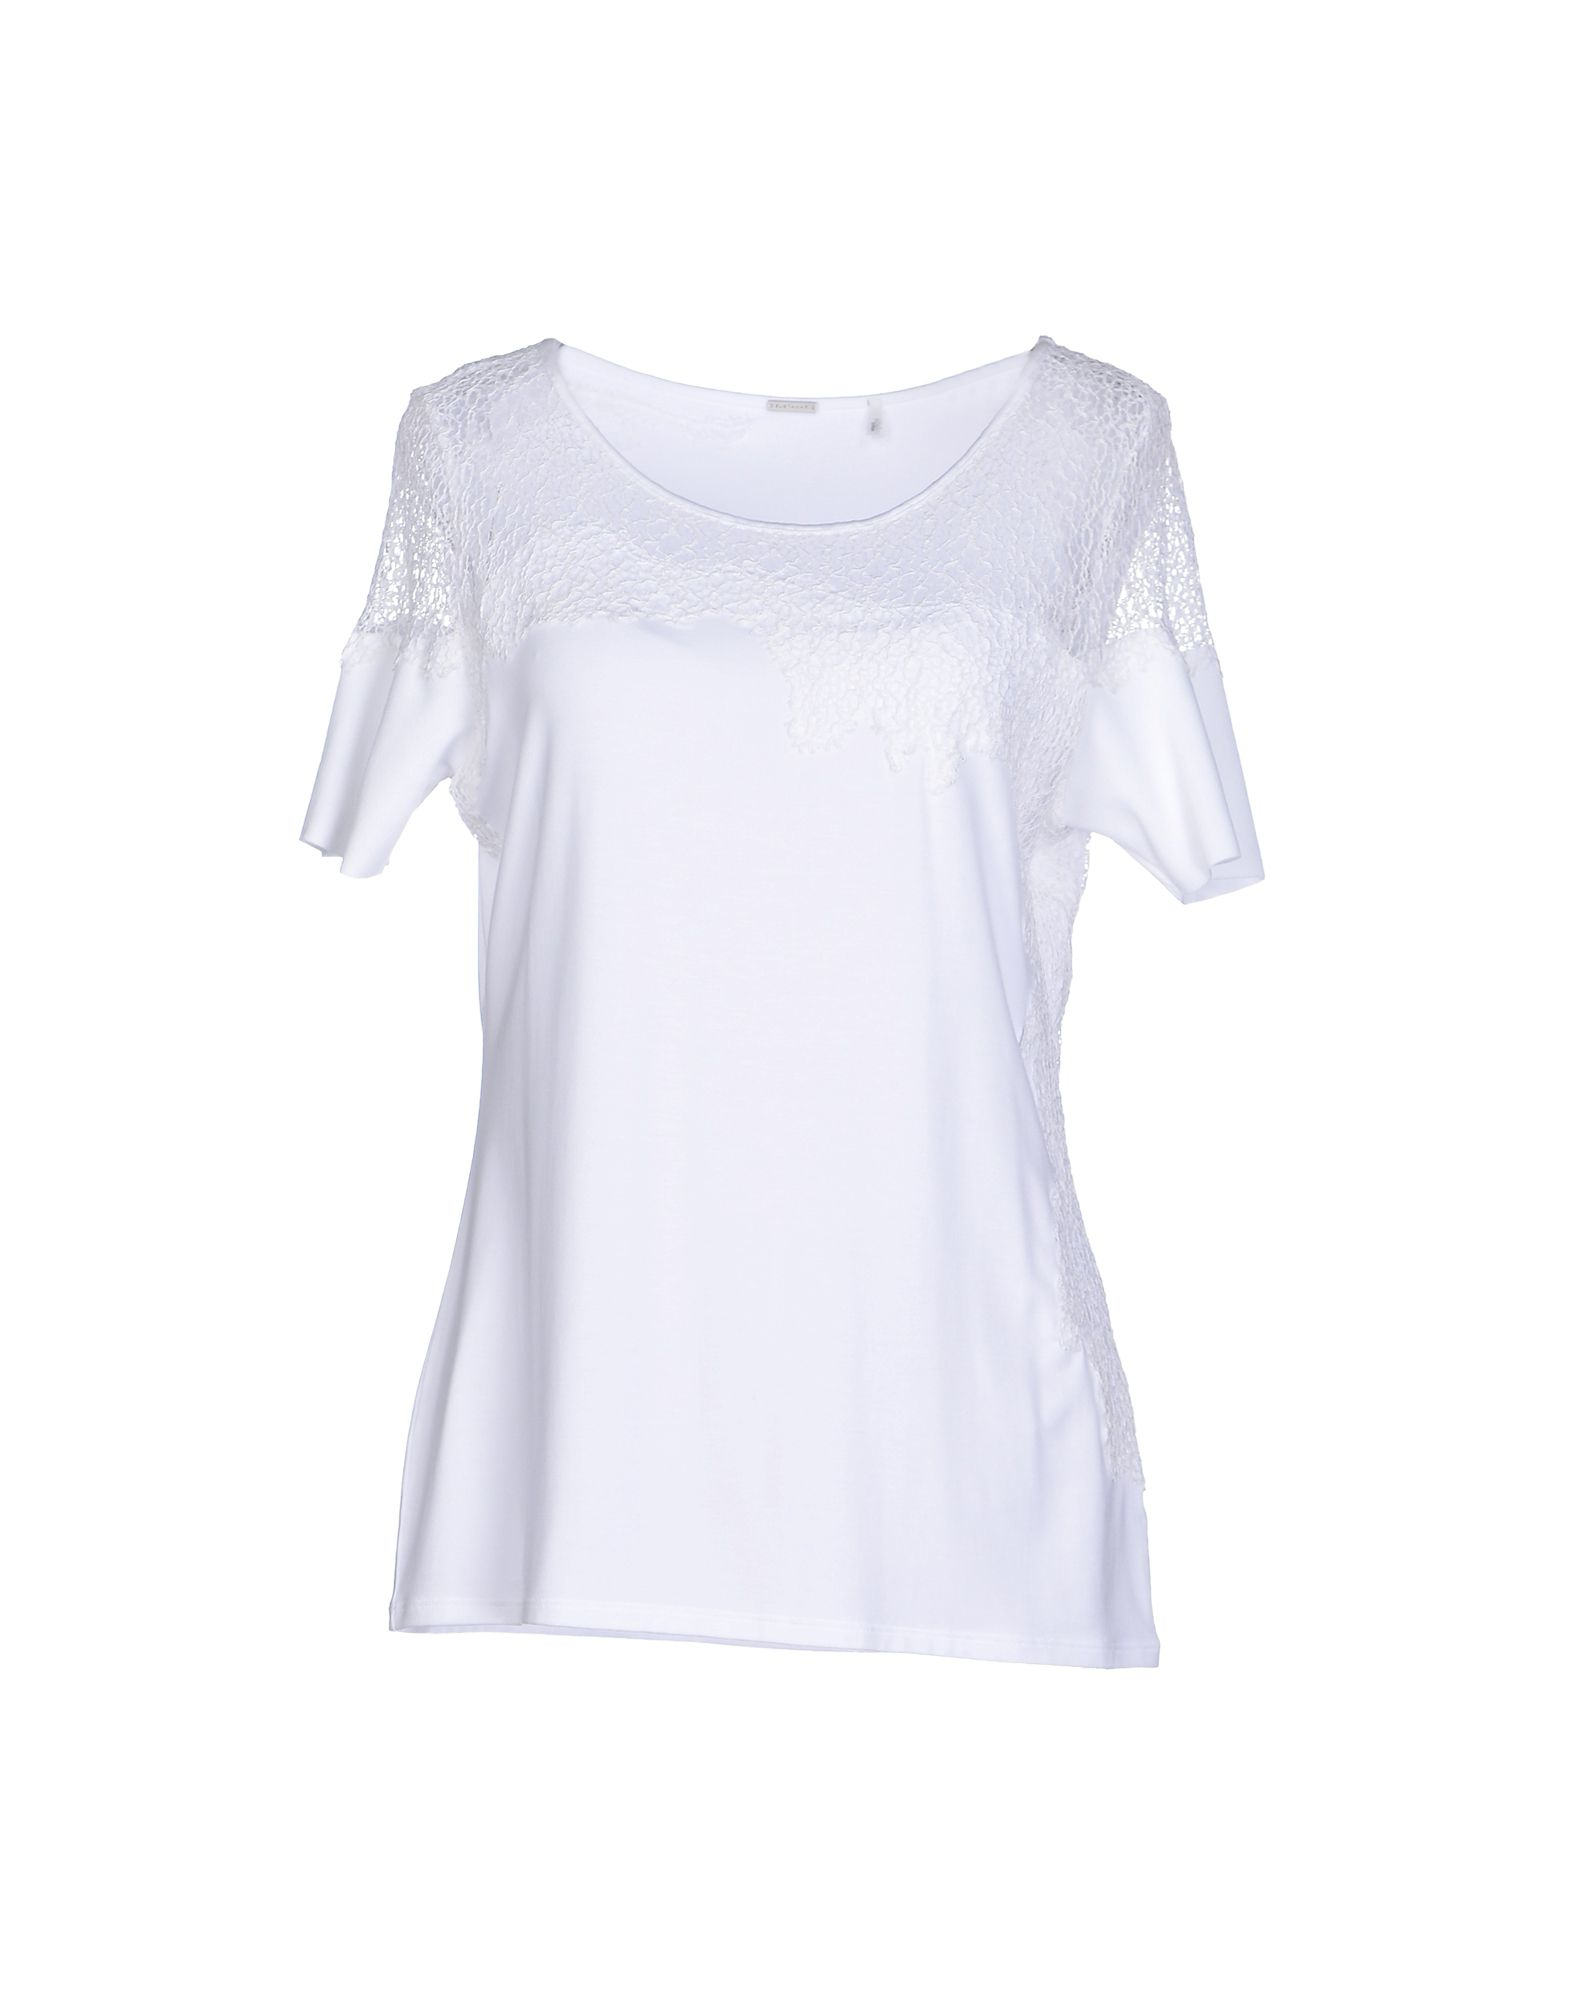 Lyst - Elie tahari T-shirt in White